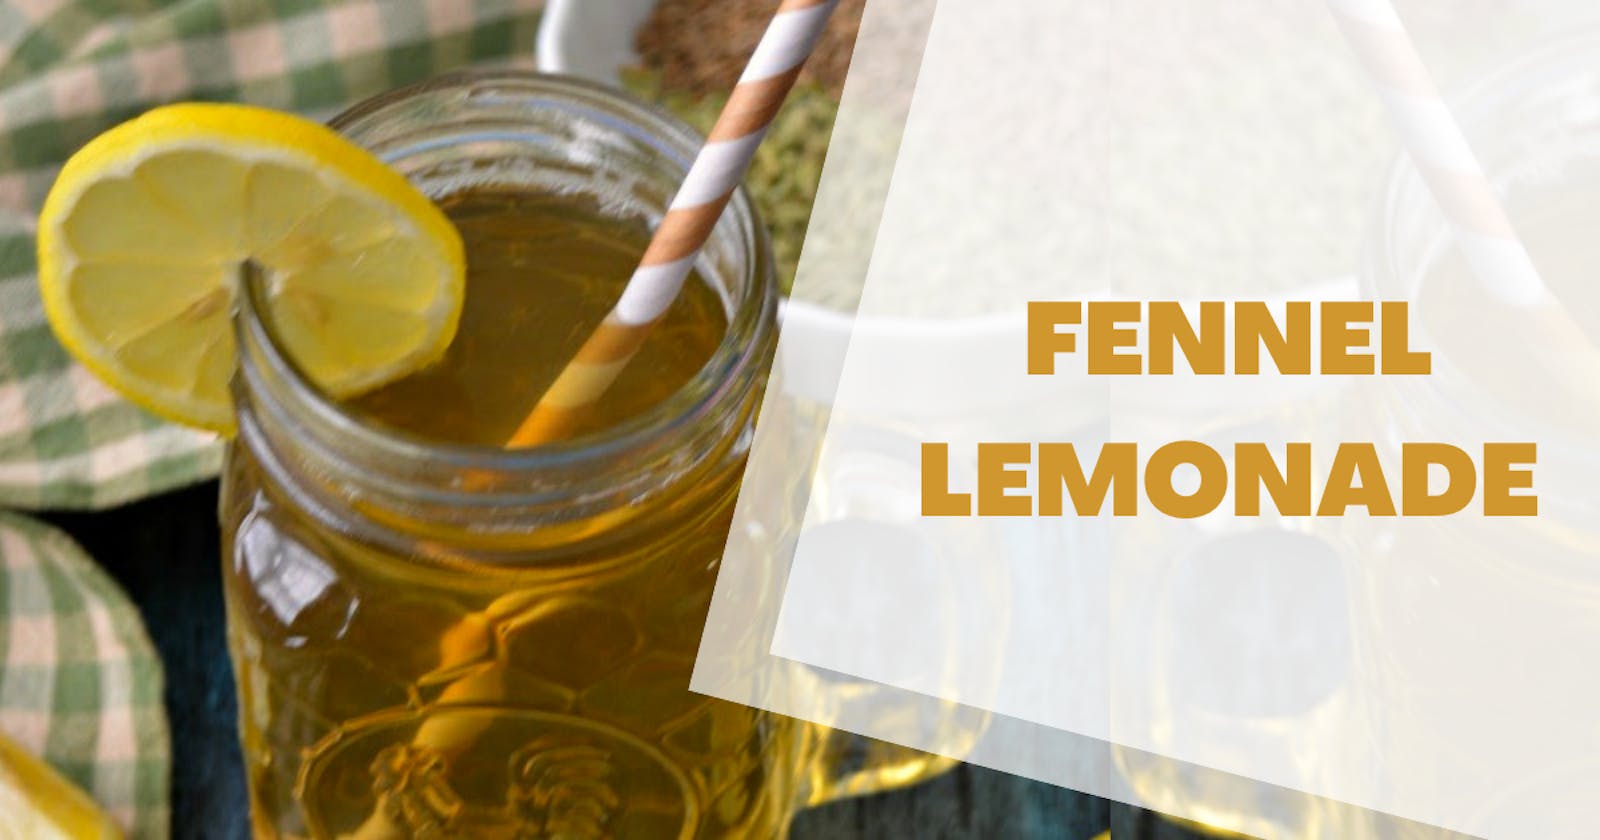 Hot Fennel Lemonade